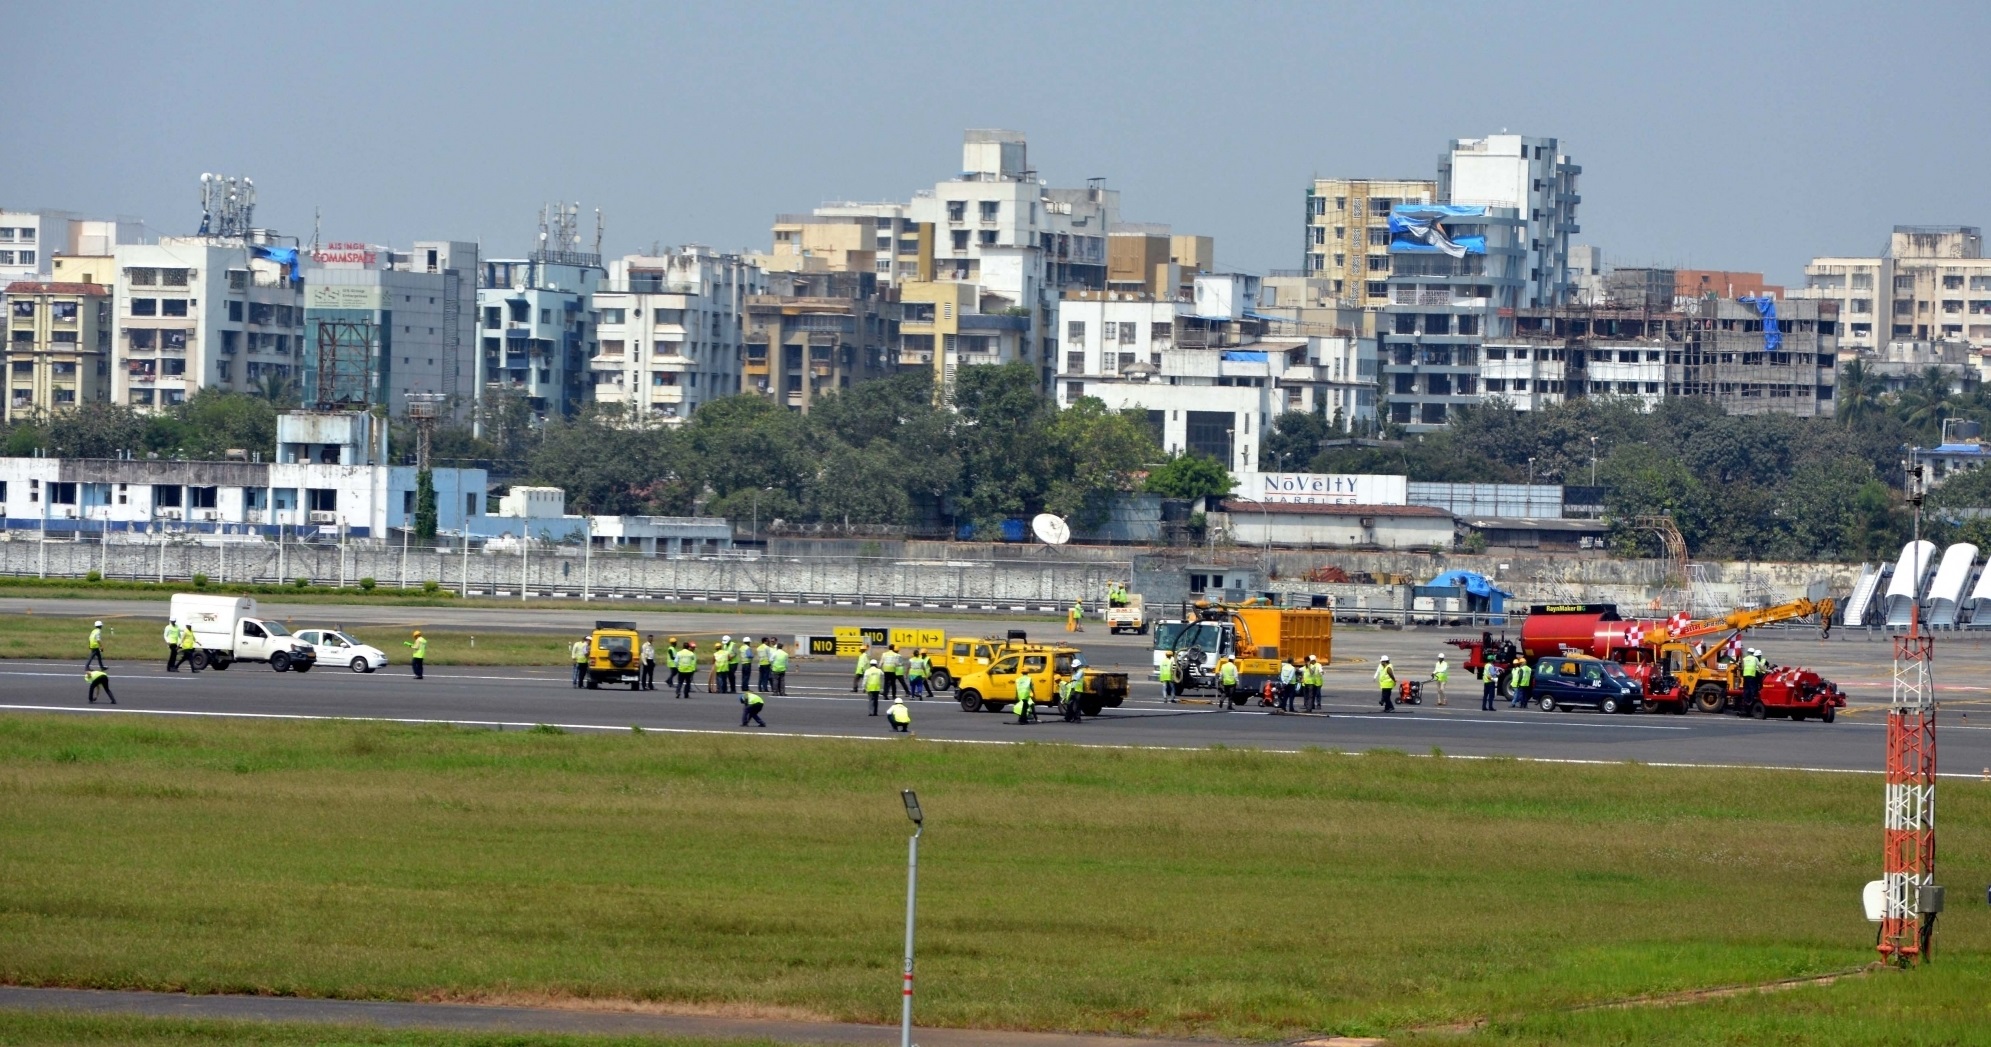 Hijack threat, Air India plane, Mumbai airport, Chhatrapati Shivaji Maharaj International Airport, Mumbai airport, Pulwama attack, CRPF troopers, CRPF jawans, CRPF soldiers, CRPF convoy, National news